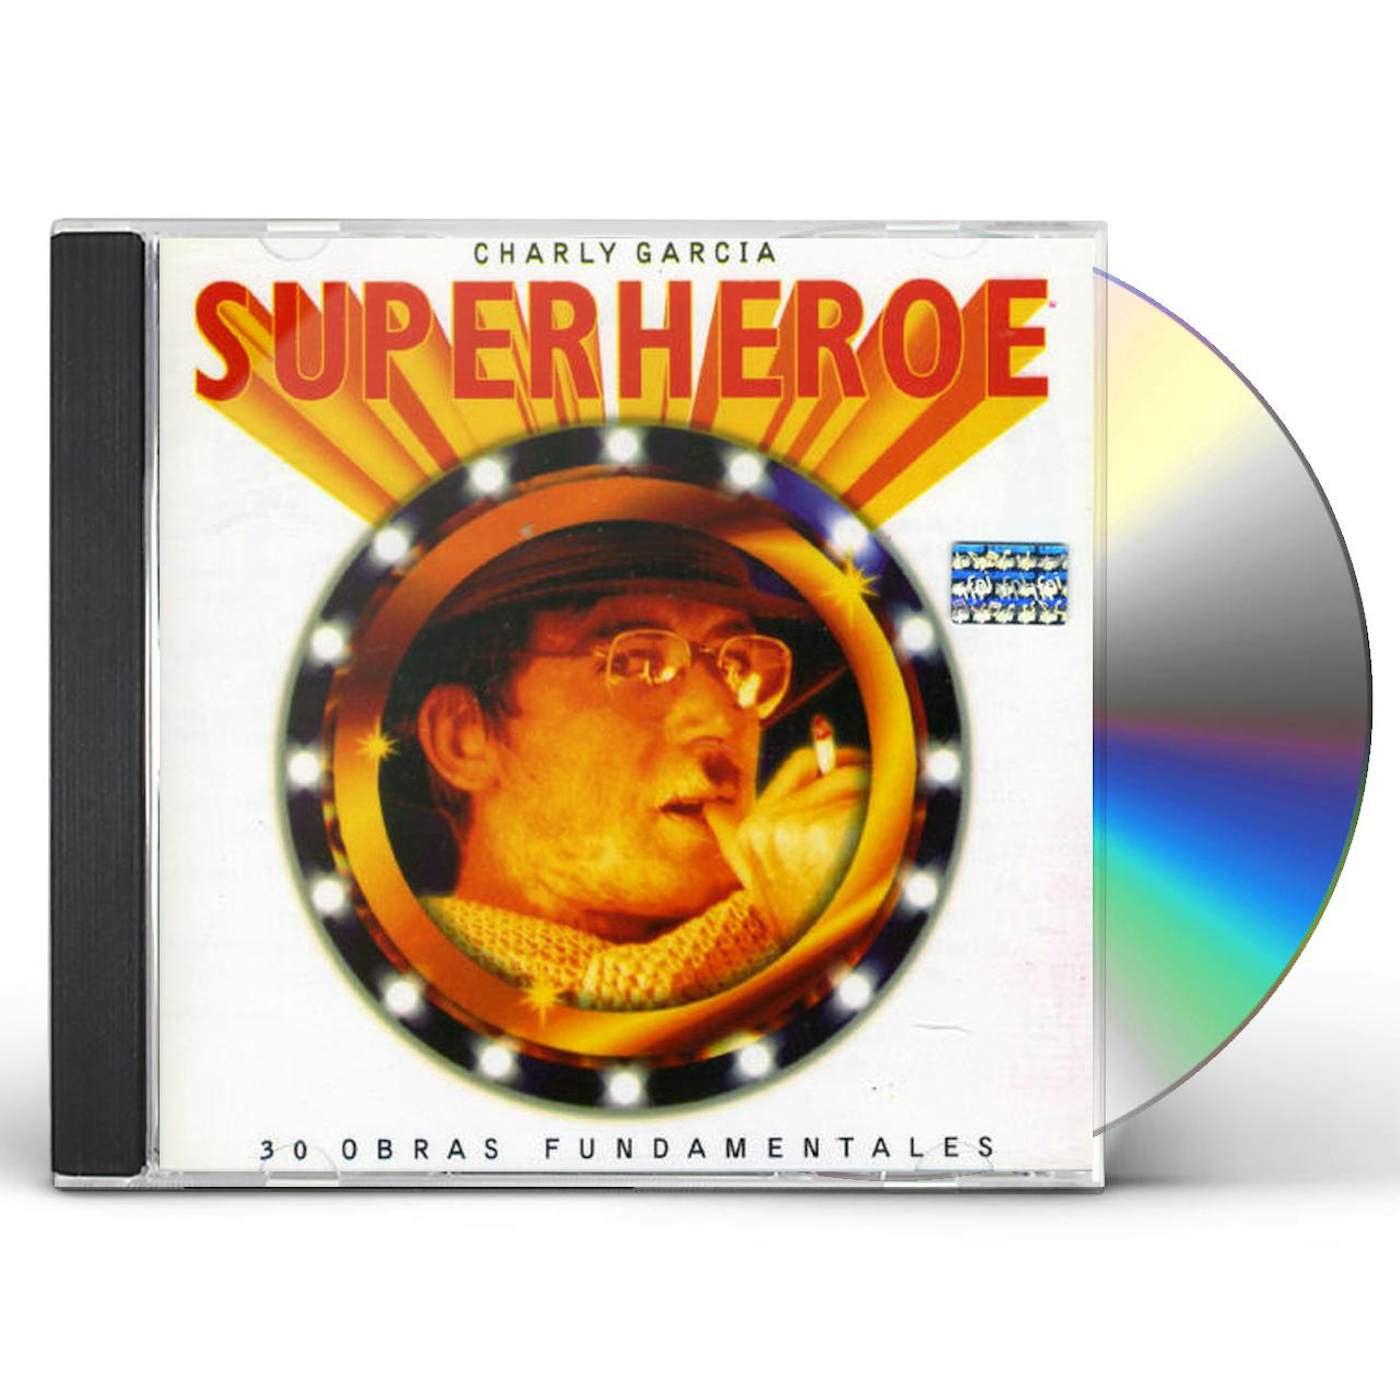 Charly Garcia Pena SUPERHEROE CD